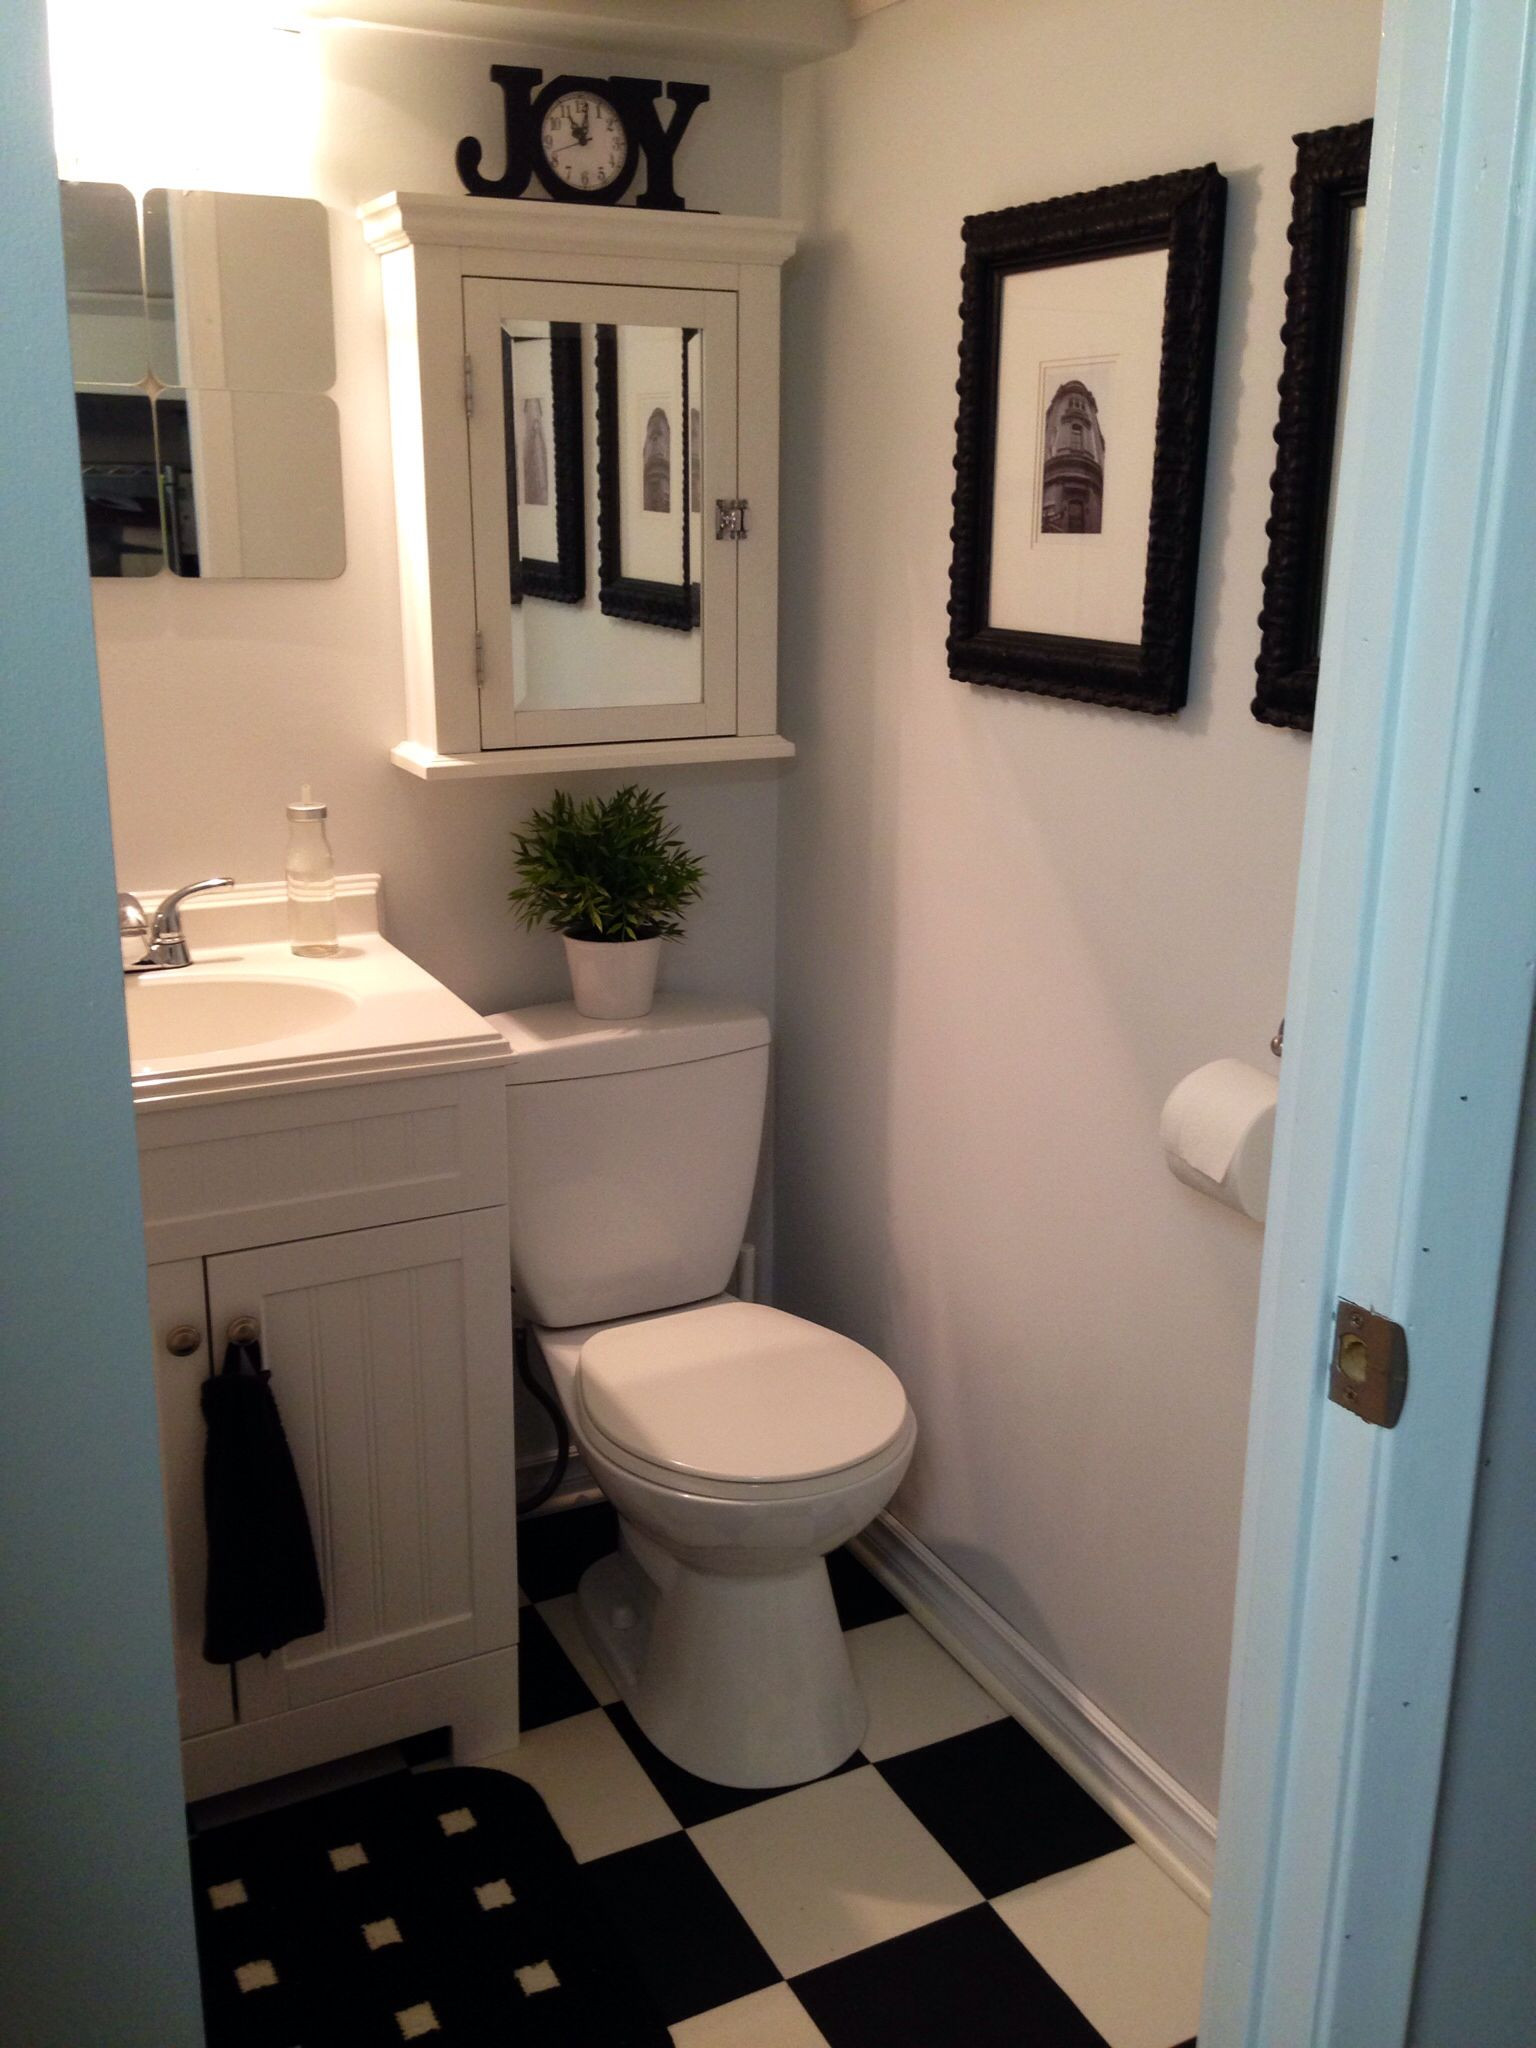 Pinterest Bathroom Decor
 ALL NEW SMALL BATHROOM IDEAS PINTEREST